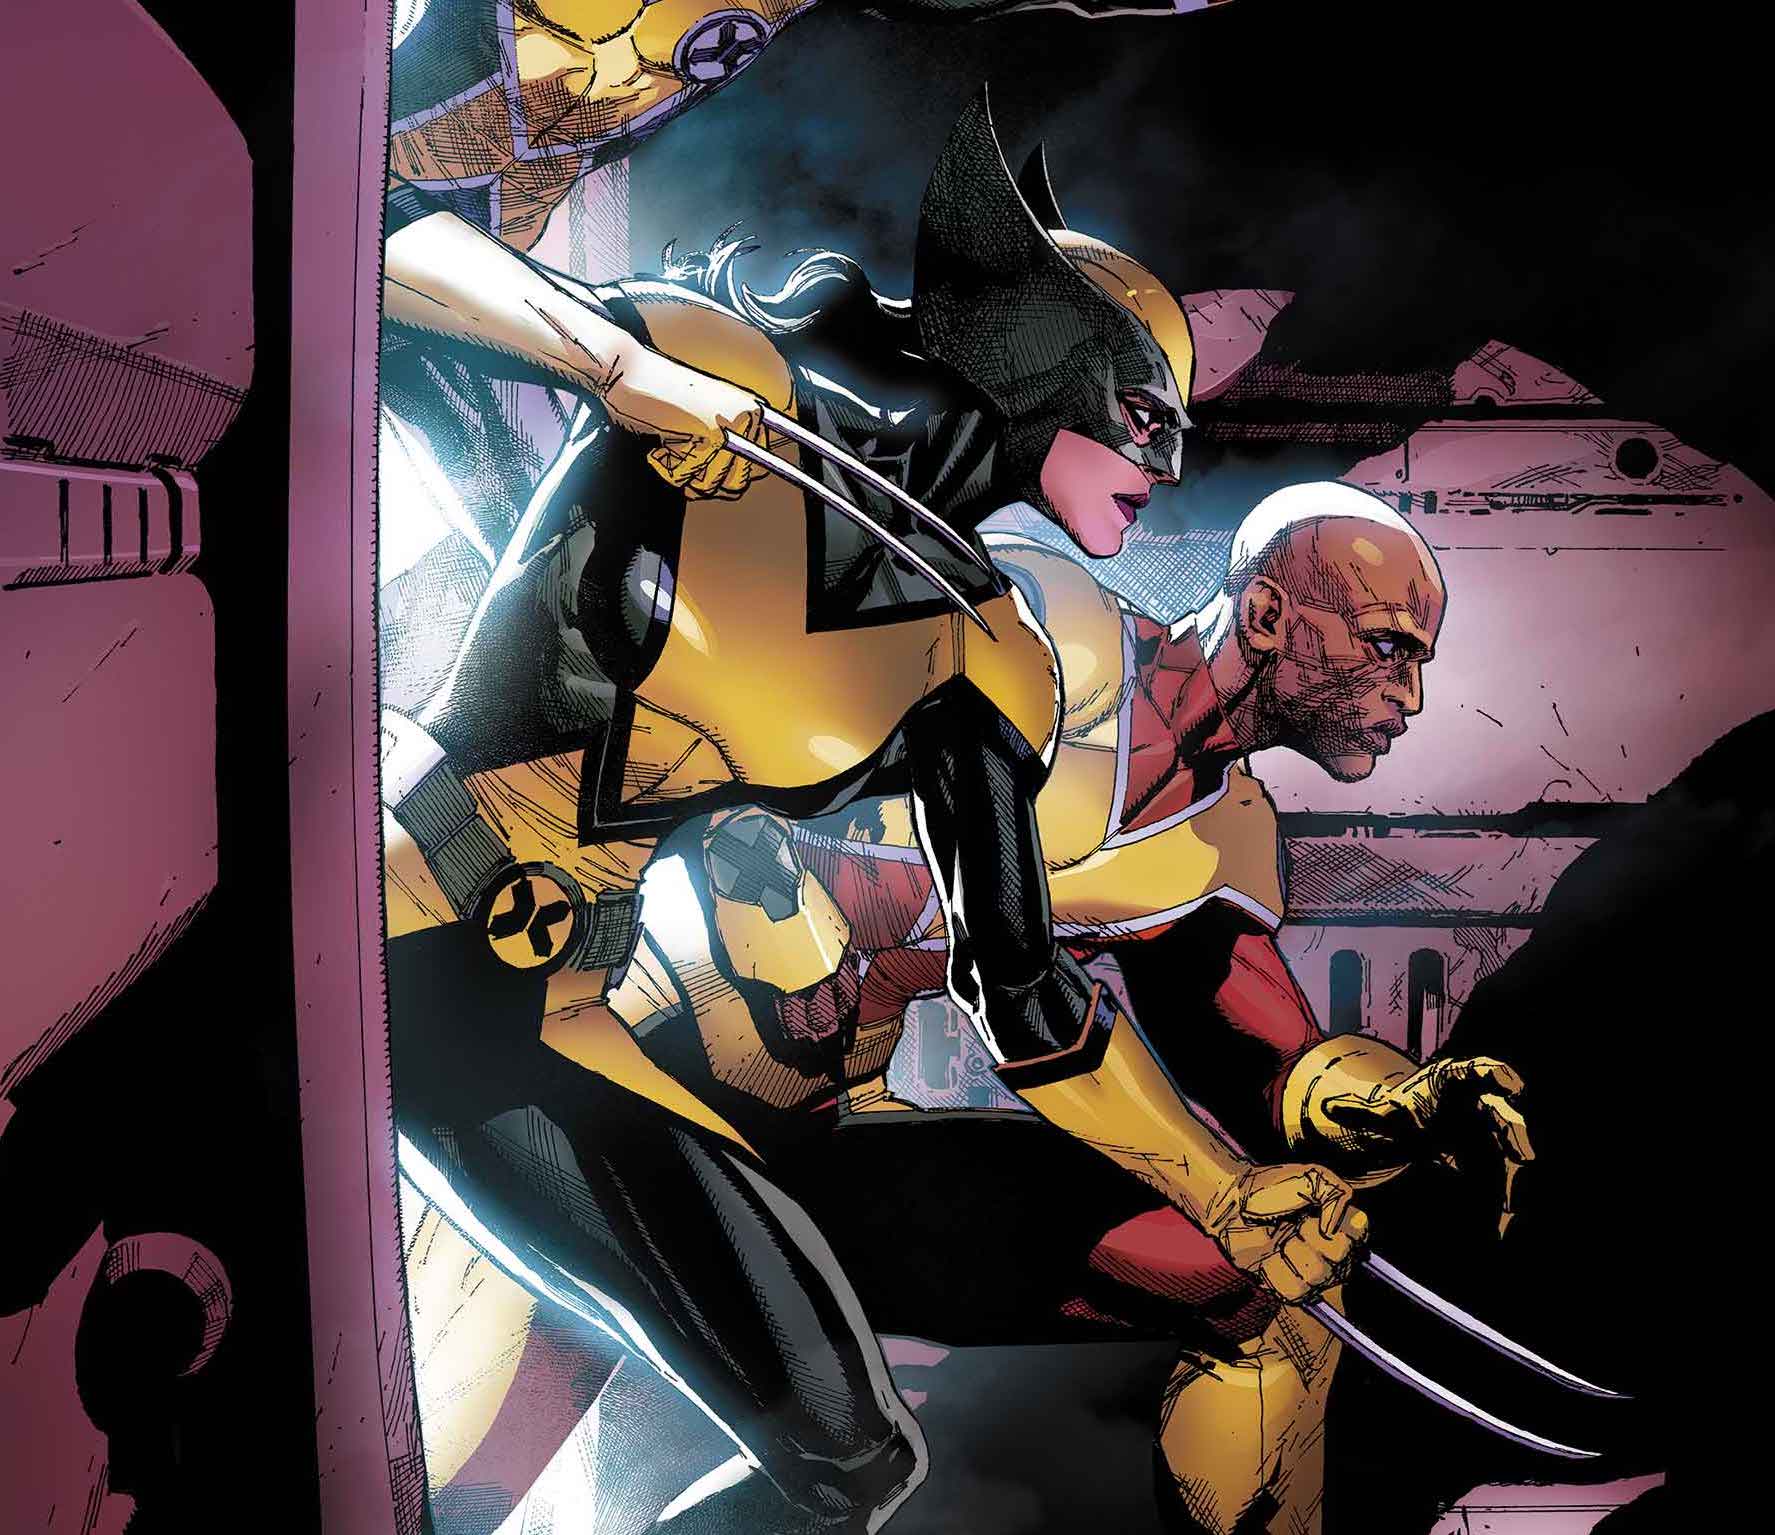 Marvel invites us to 'enter the vault' in X-Men #18